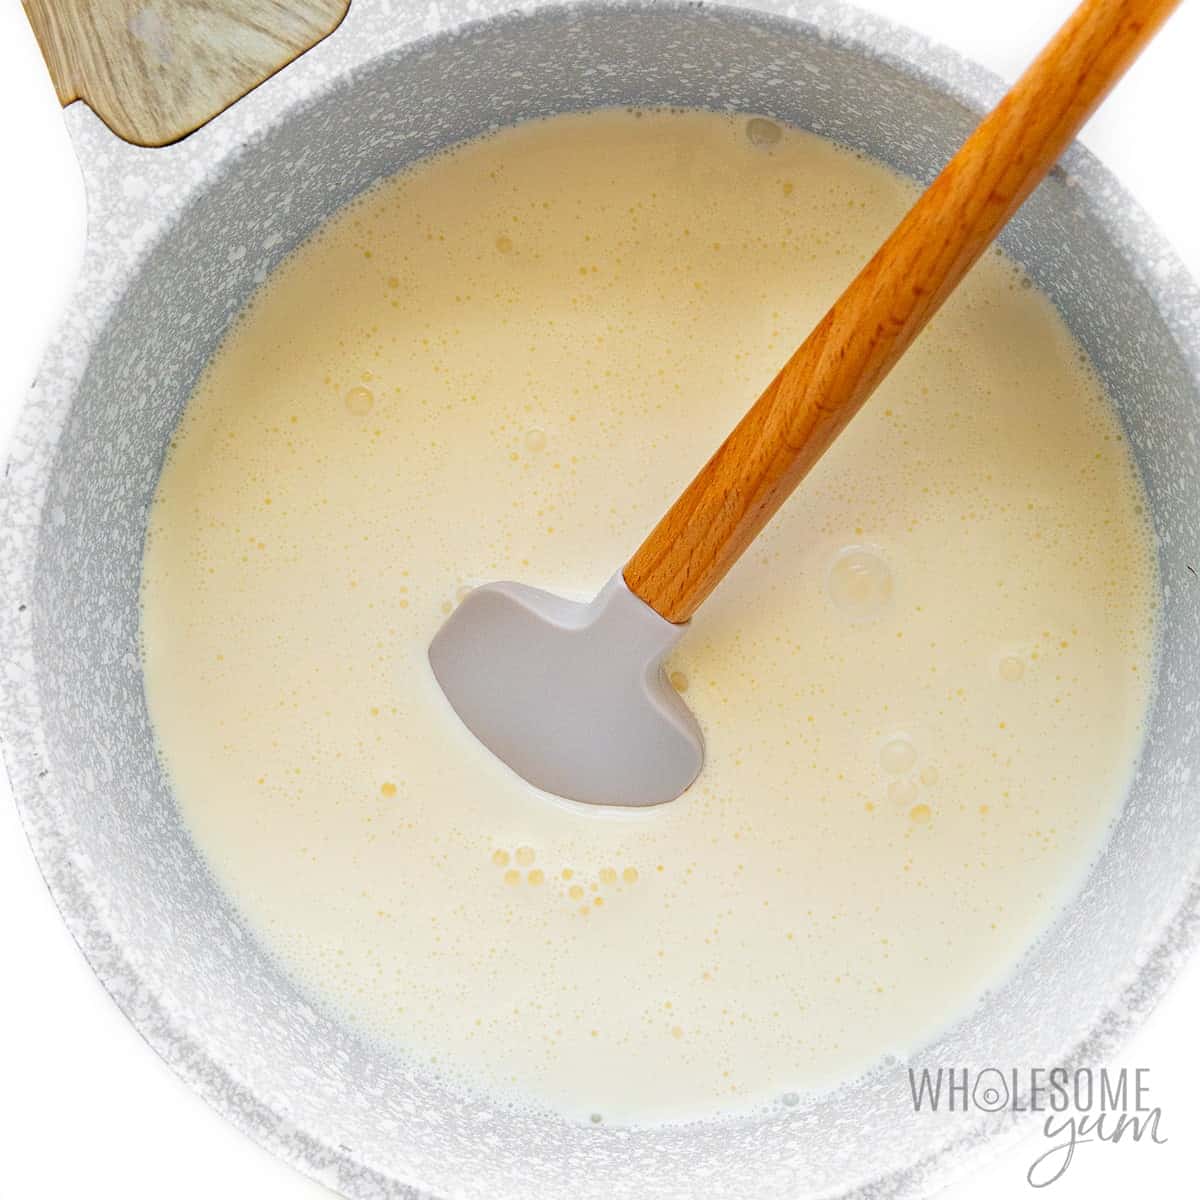 Cream heating in a saucepan